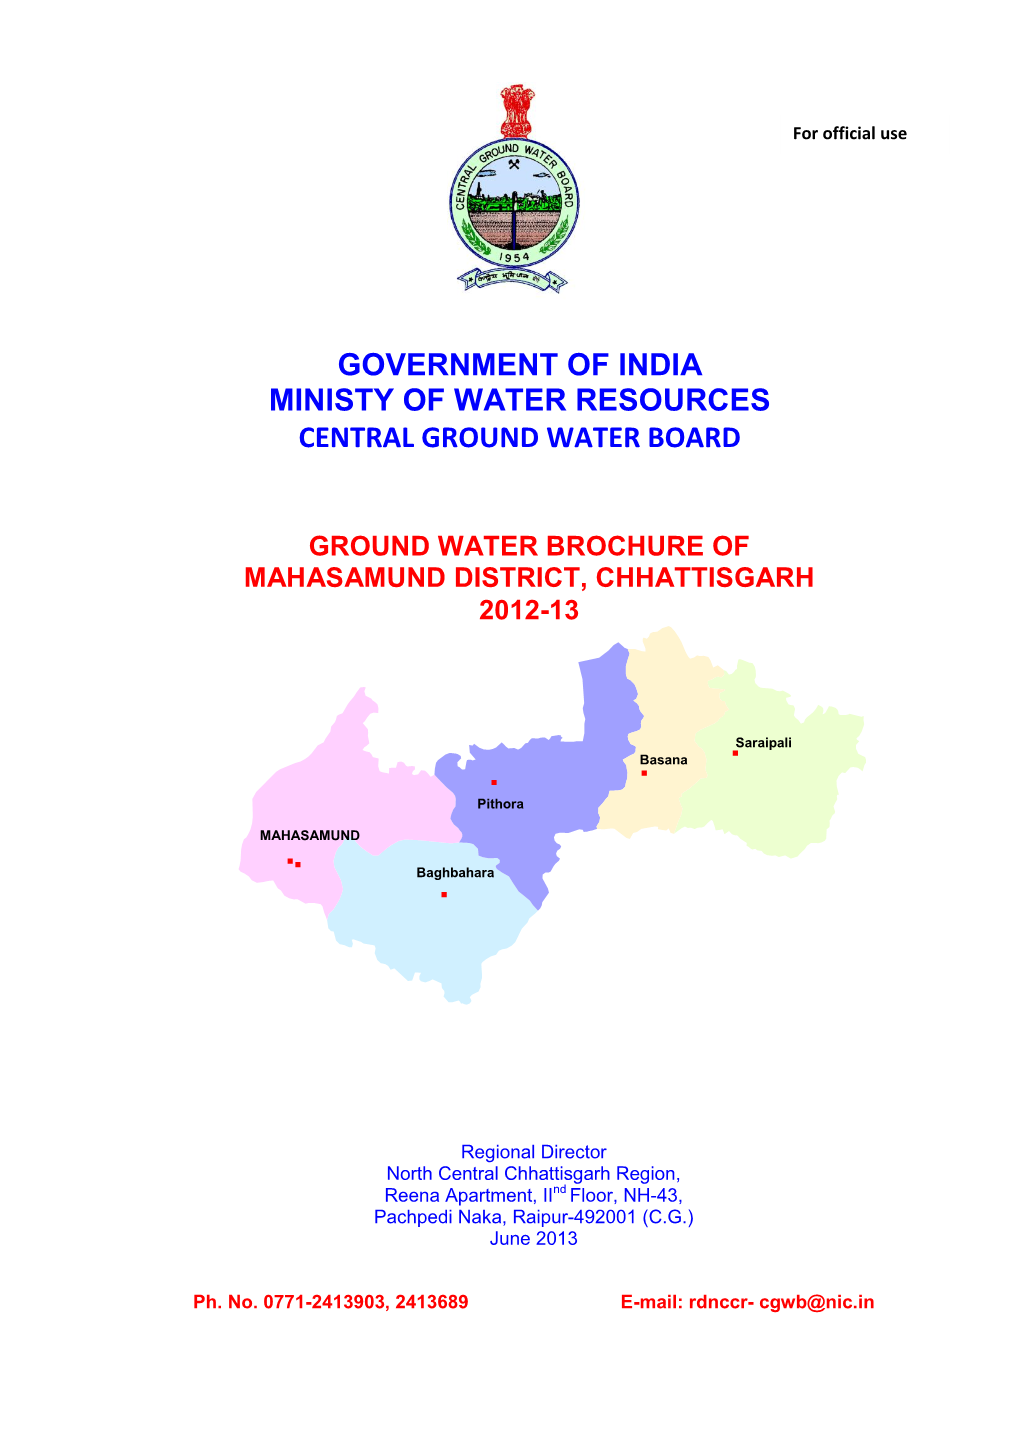 Ground Water Brochure of Mahasamund District, Chhattisgarh 2012-13